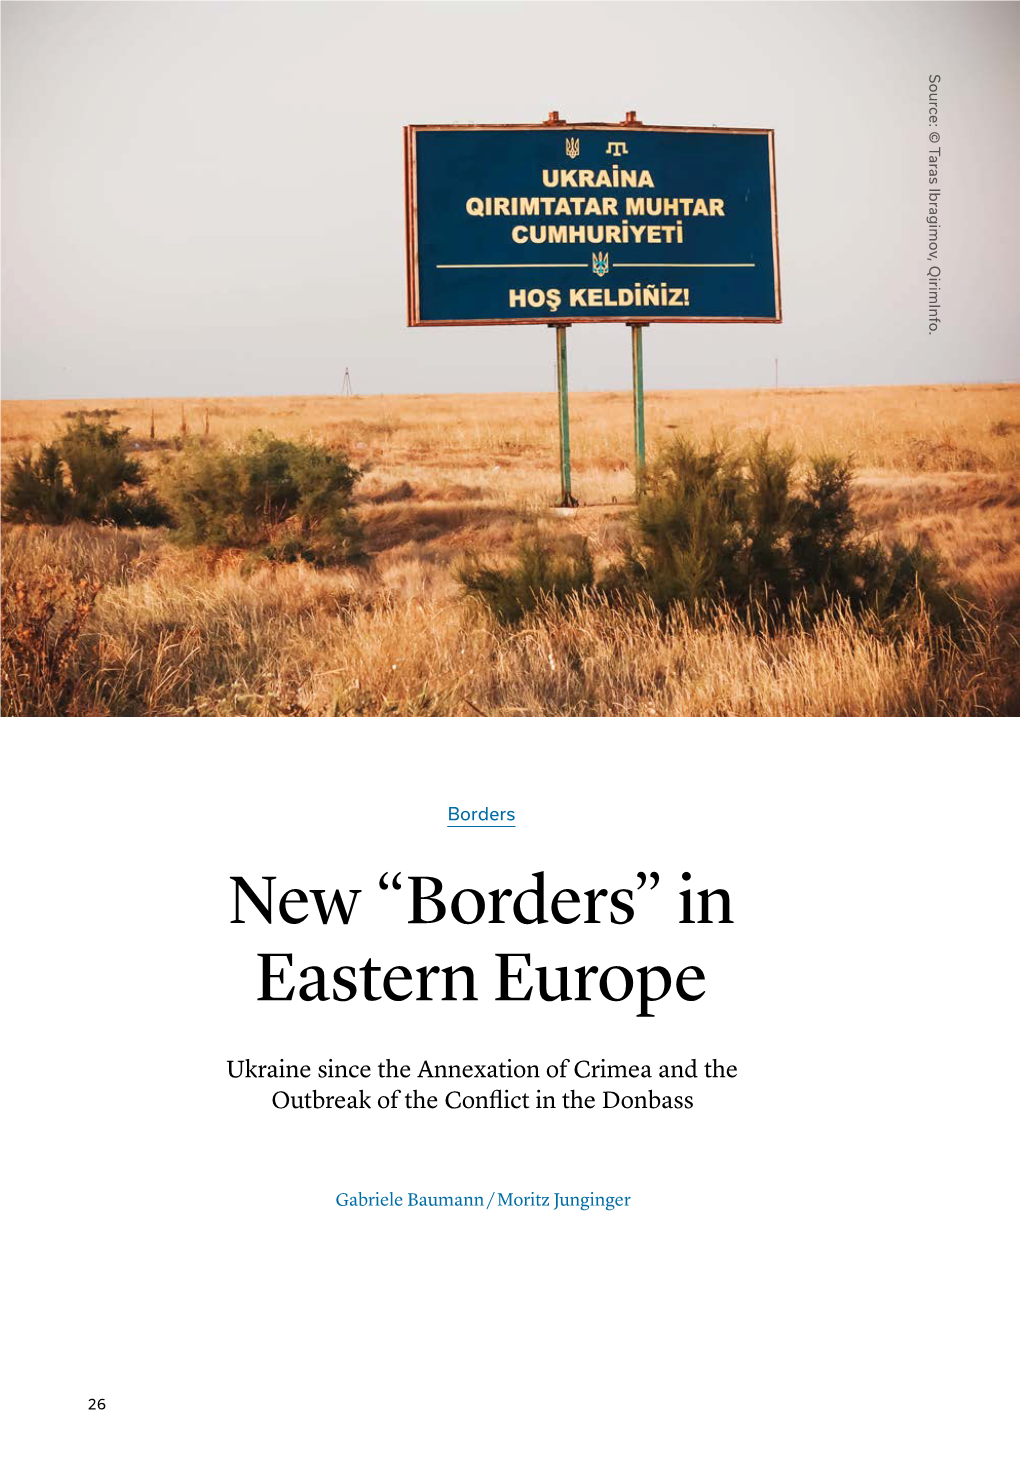 Borders New “Borders” in Eastern Europe